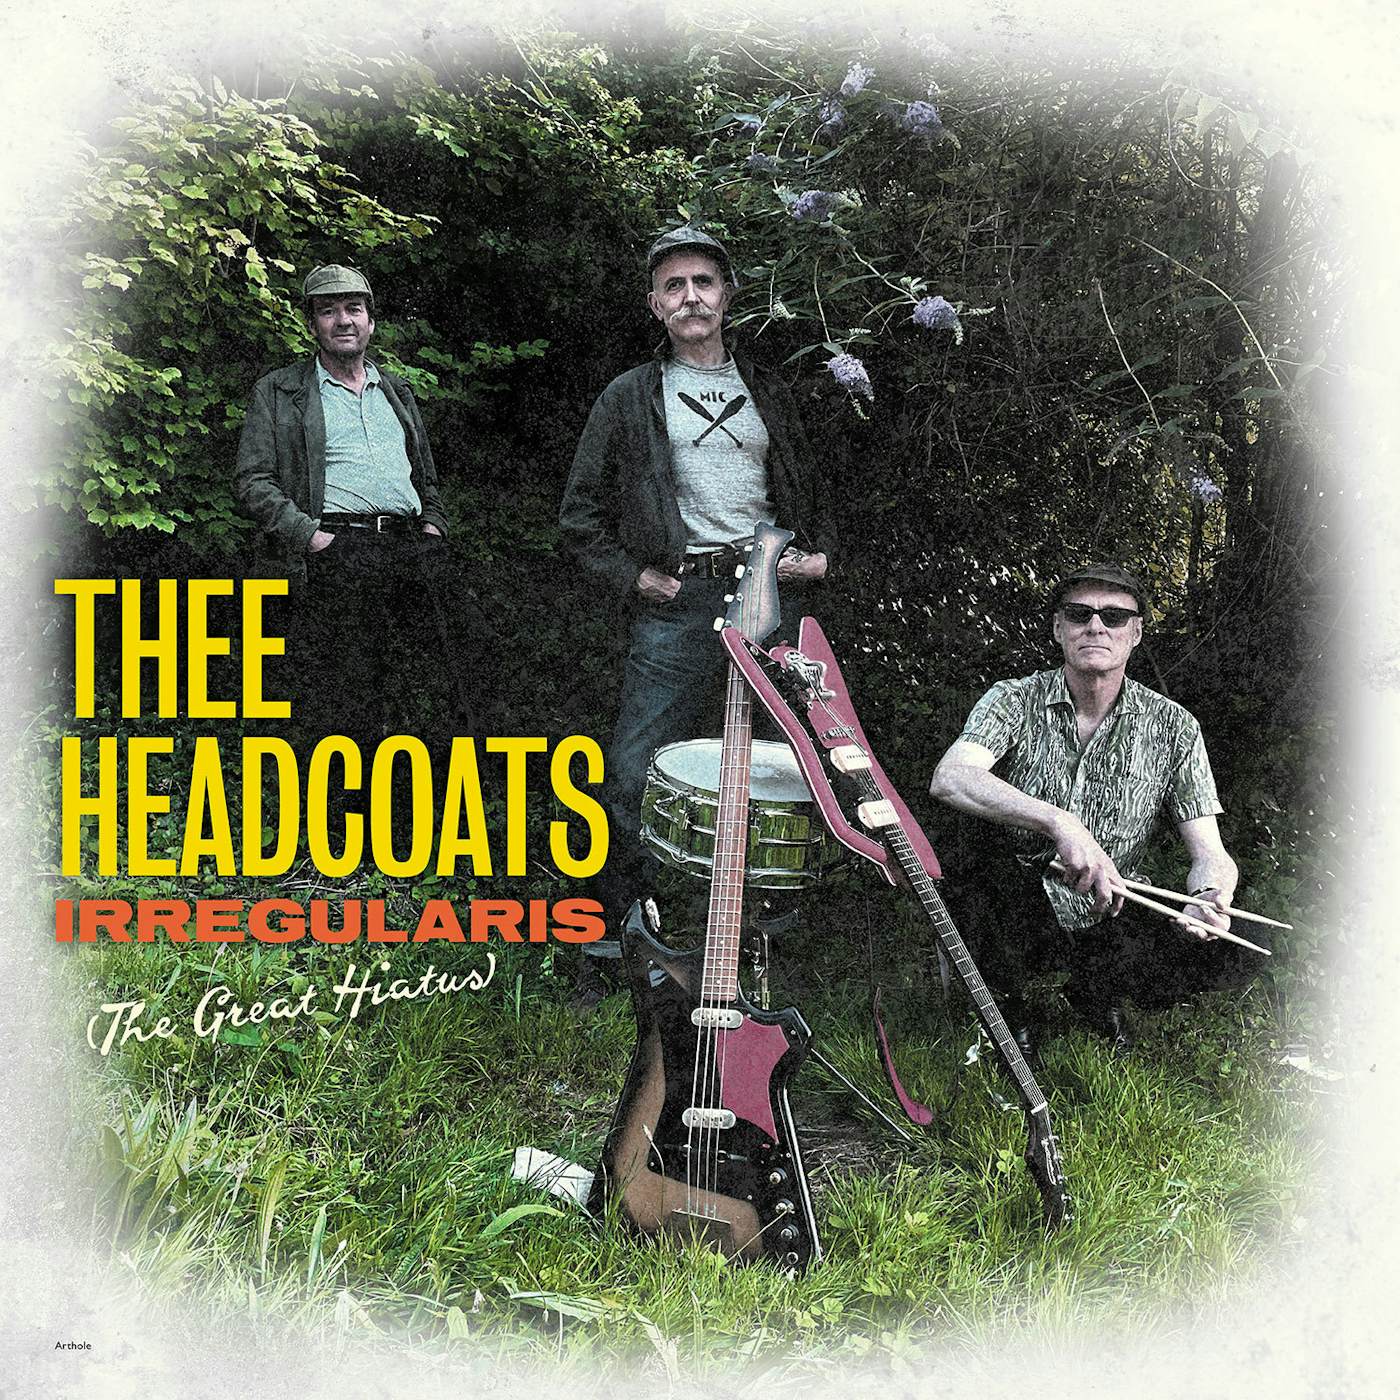 Thee Headcoats Irregularis  The Great Hiatus CD